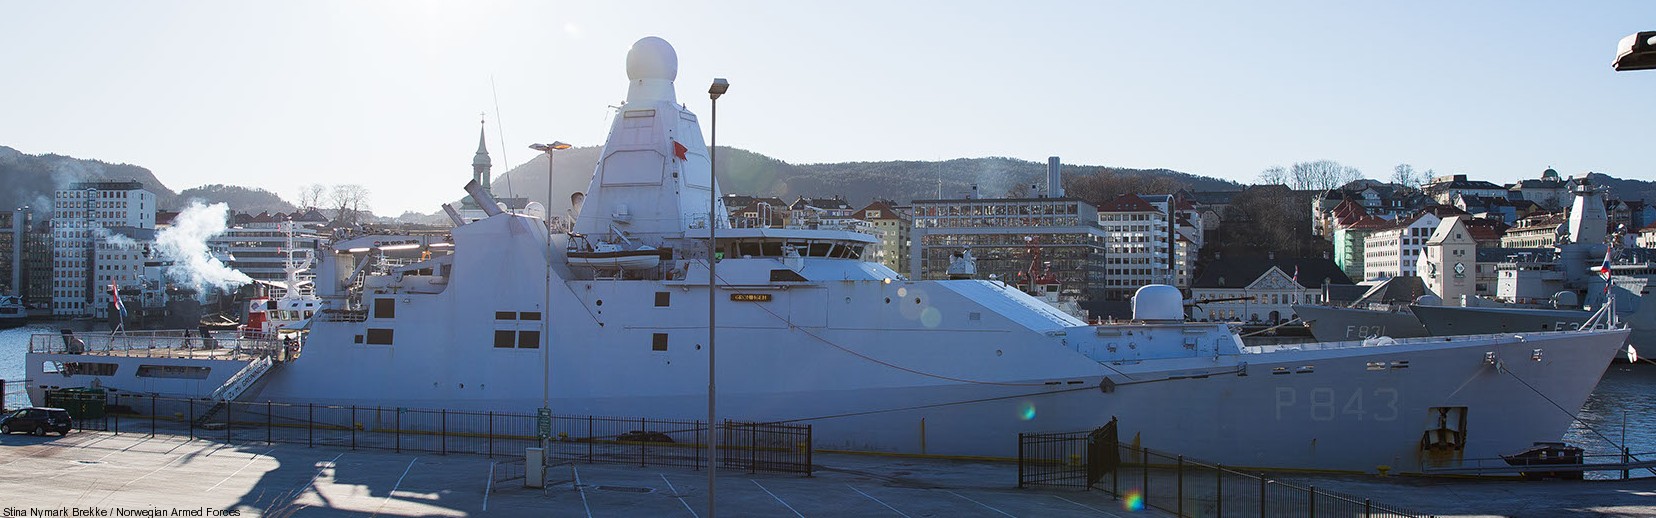 p-843 hnlms groningen holland class offshore patrol vessel opv royal netherlands navy 10